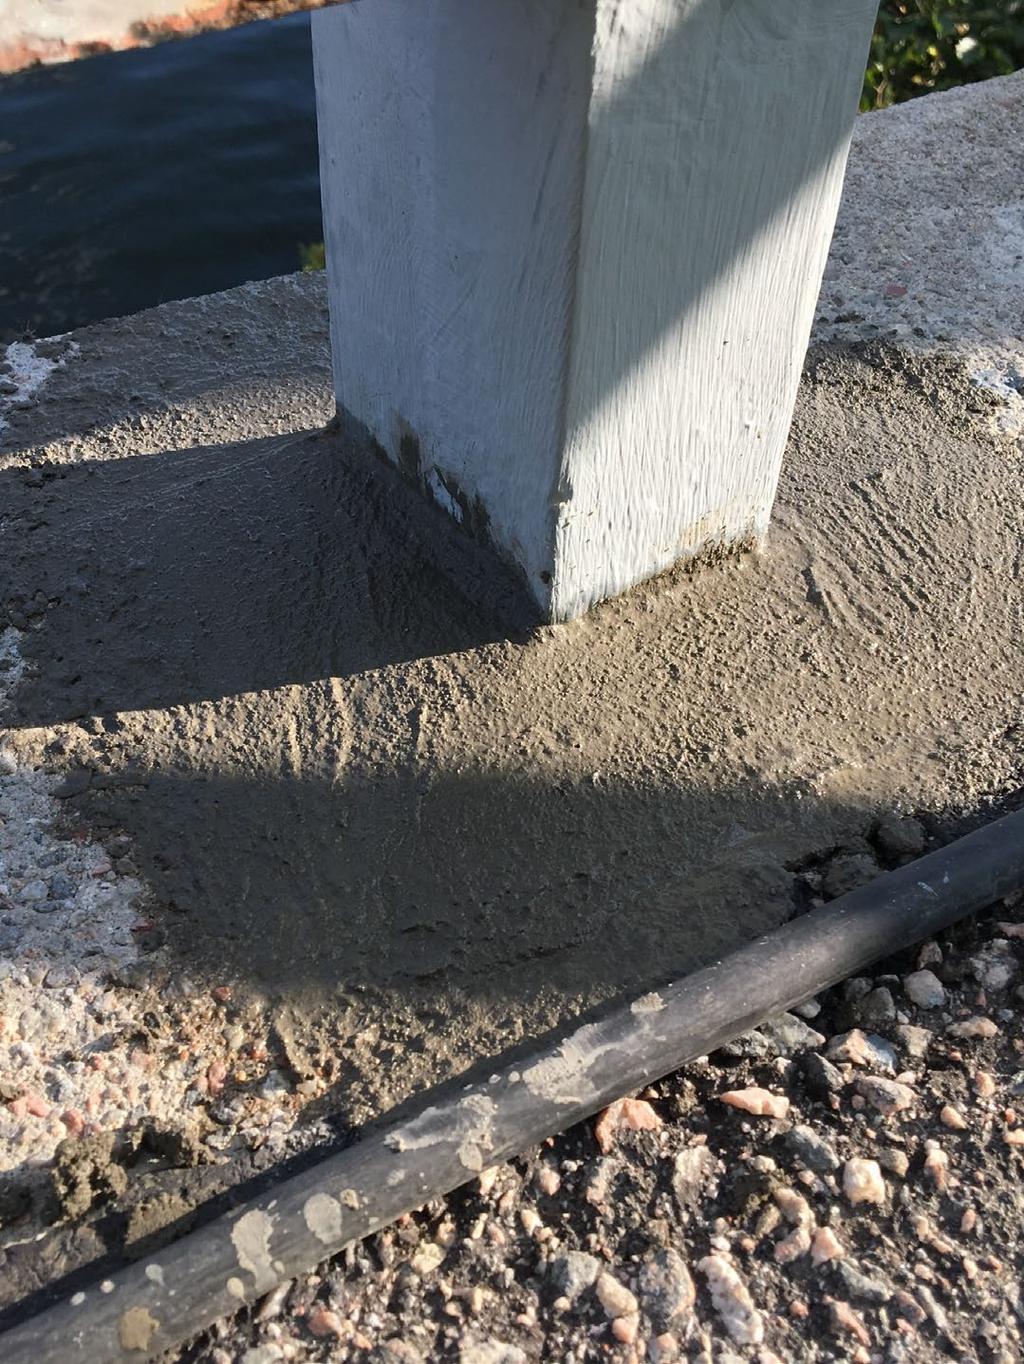 bru, Sverige klarer kontakt med betong och ferskvann 1